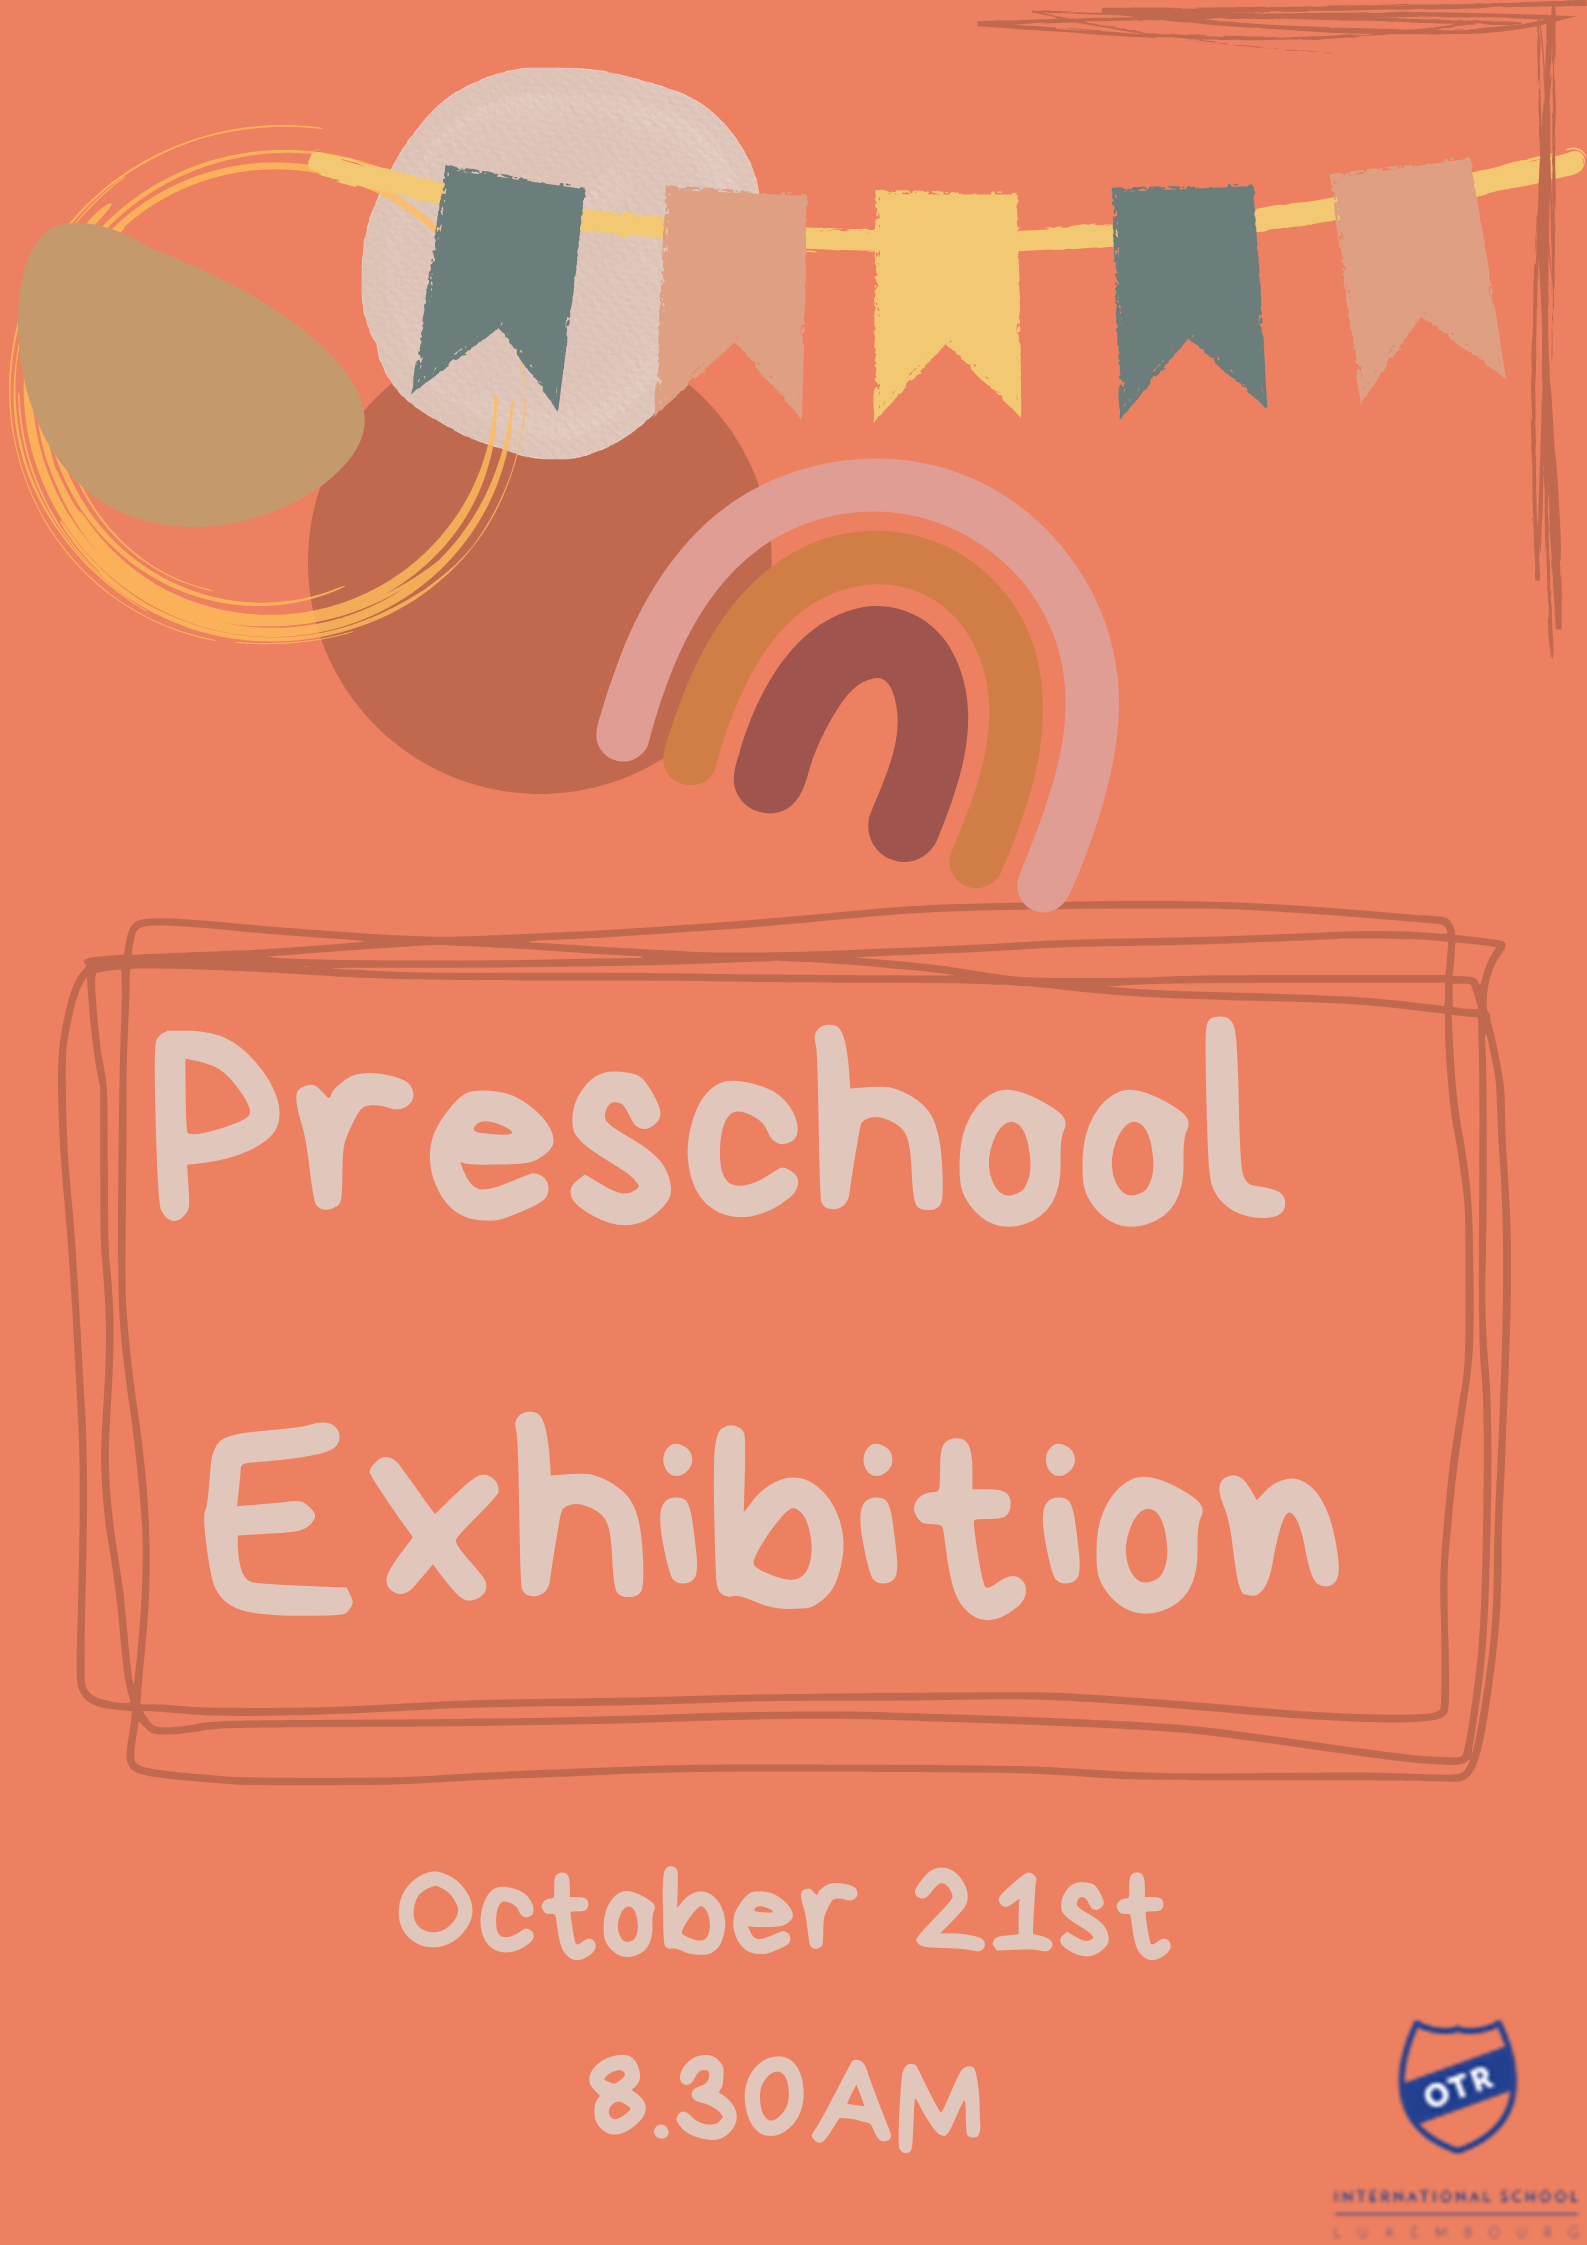 OTR International School Preschool Exhibition